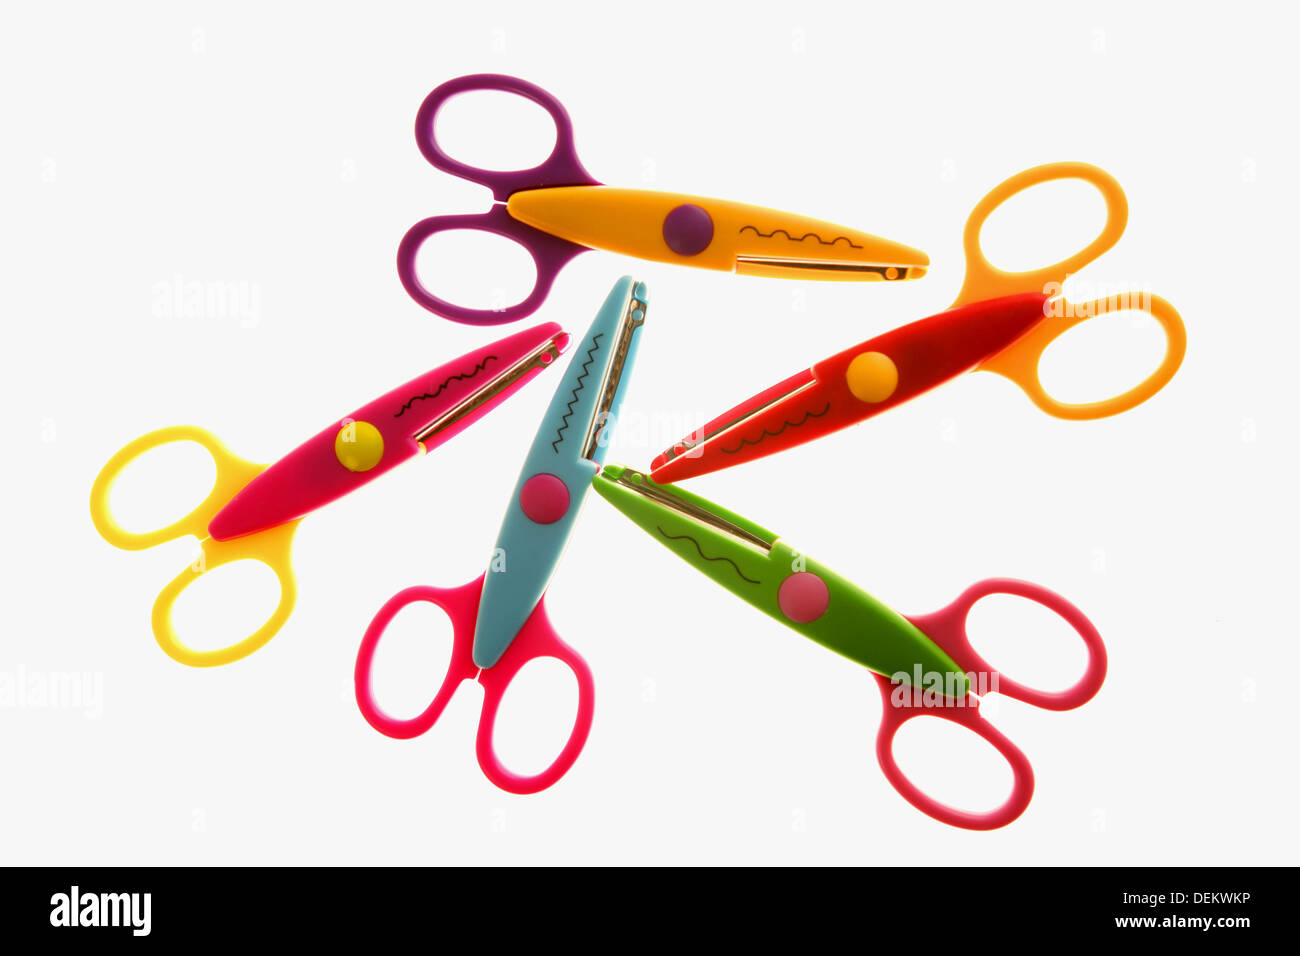 Five educational color scissors Stock Photo